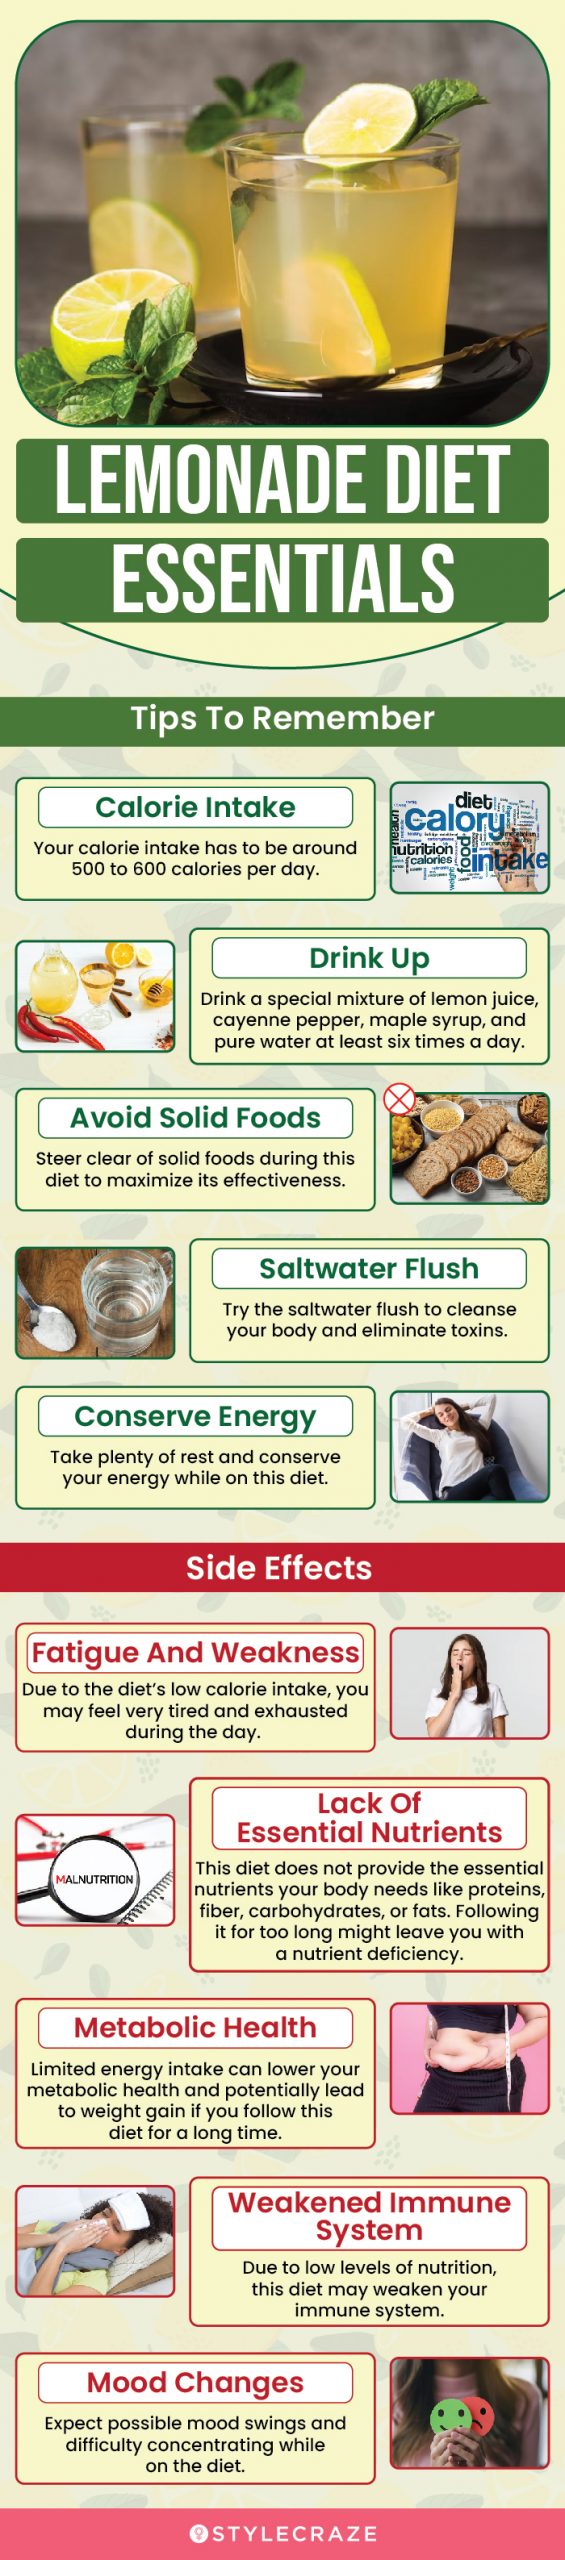 lemonade diet essentials (infographic)